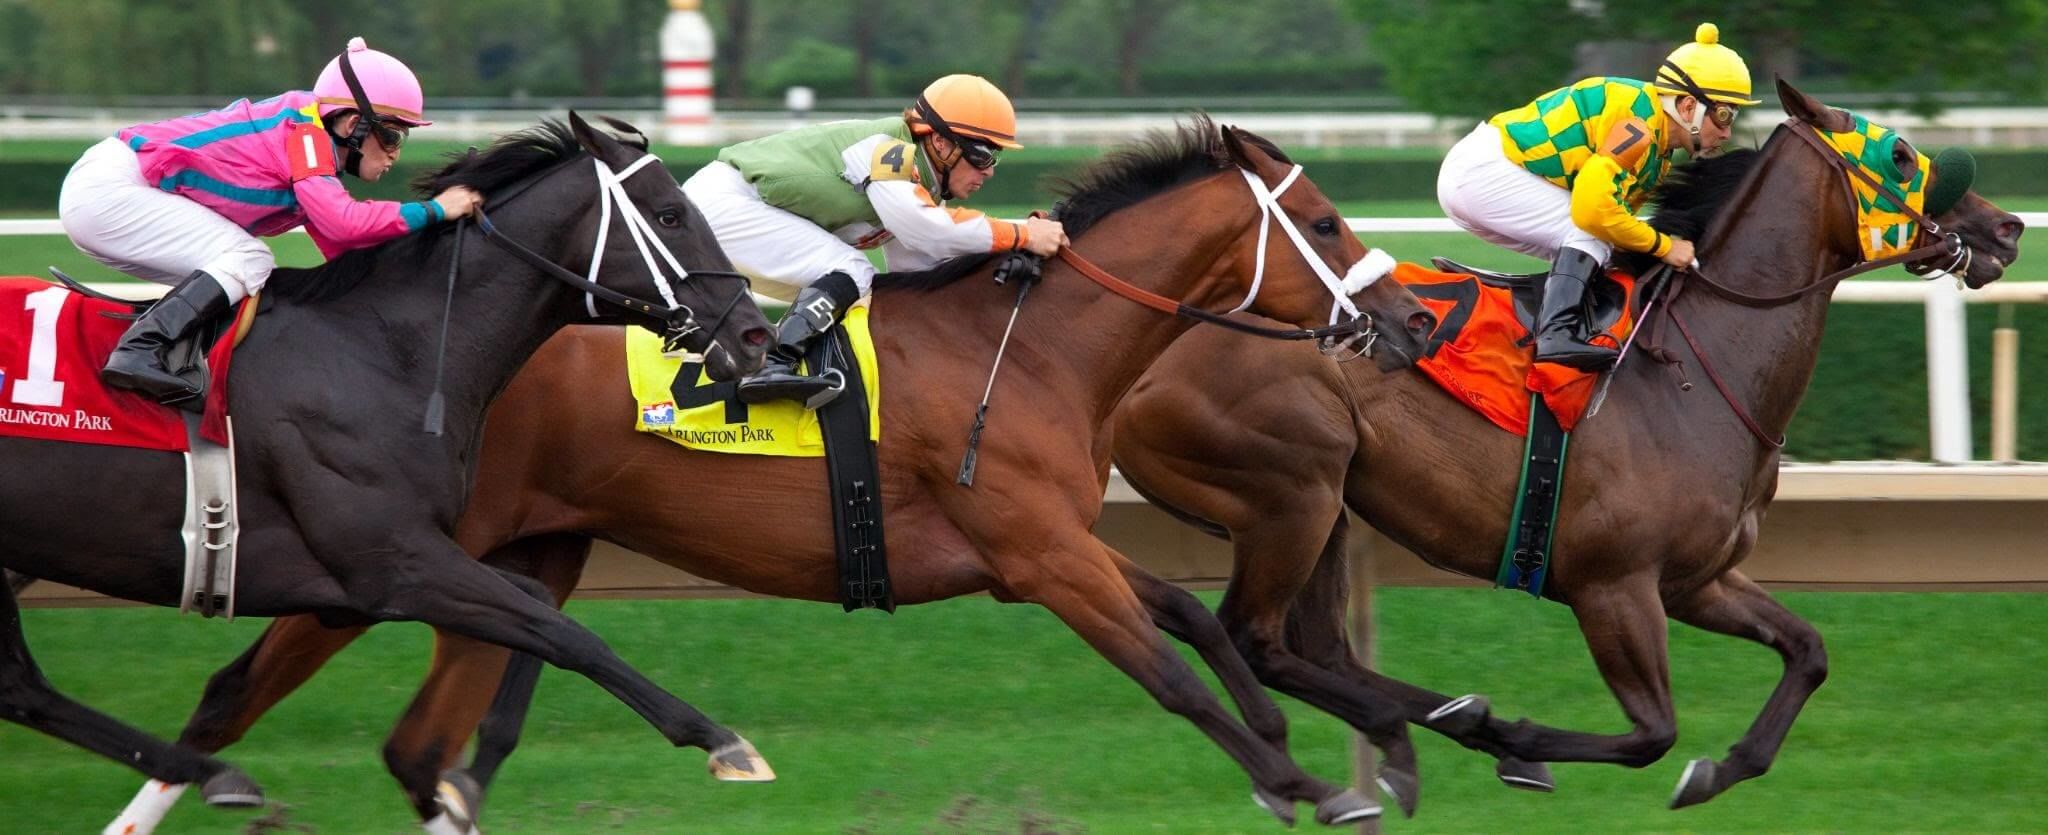 horse racing betting terms box